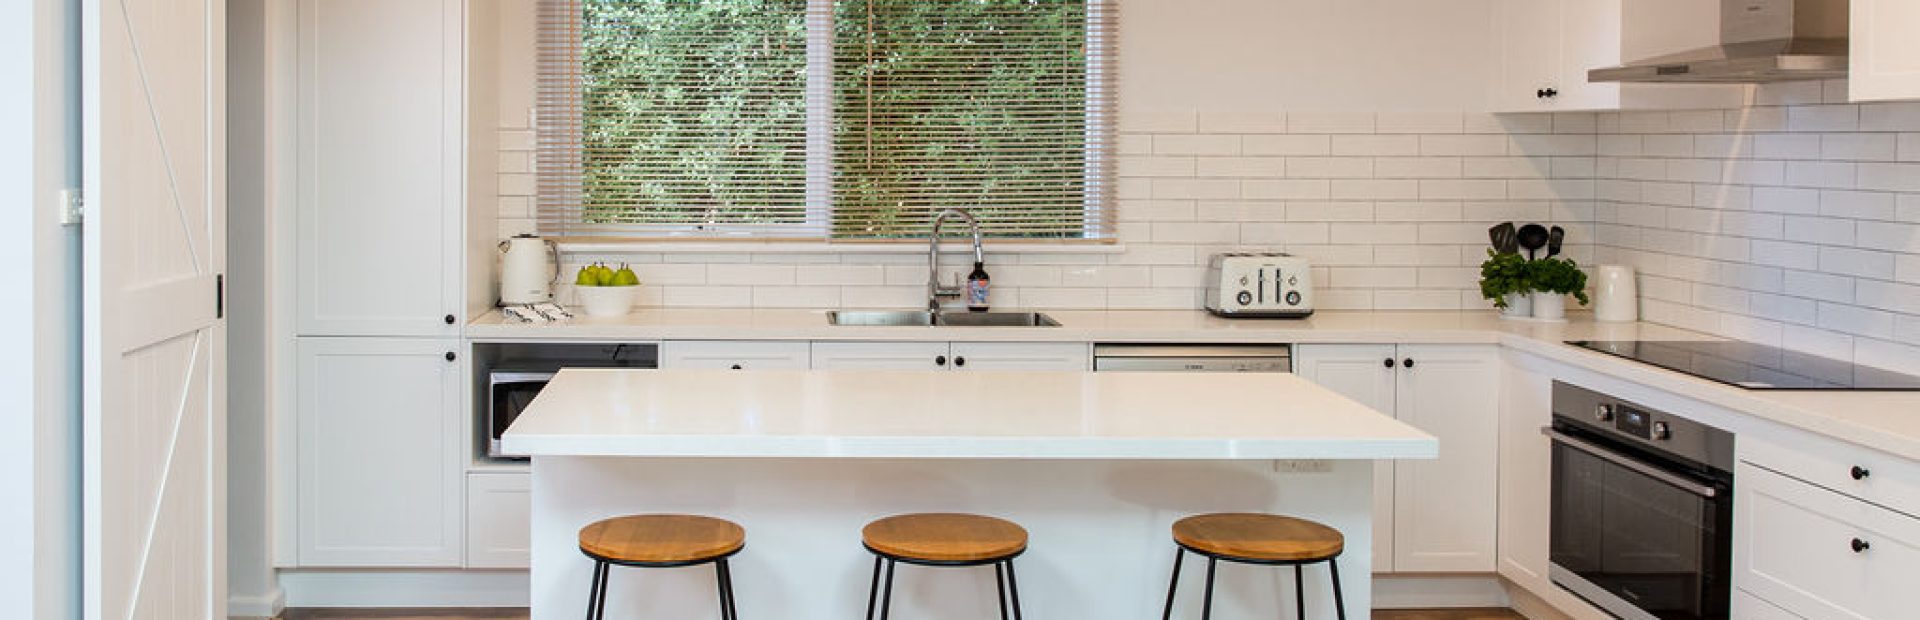 DIY Kitchen Renovation using white kitchen cabinetry and standalone stone island bench